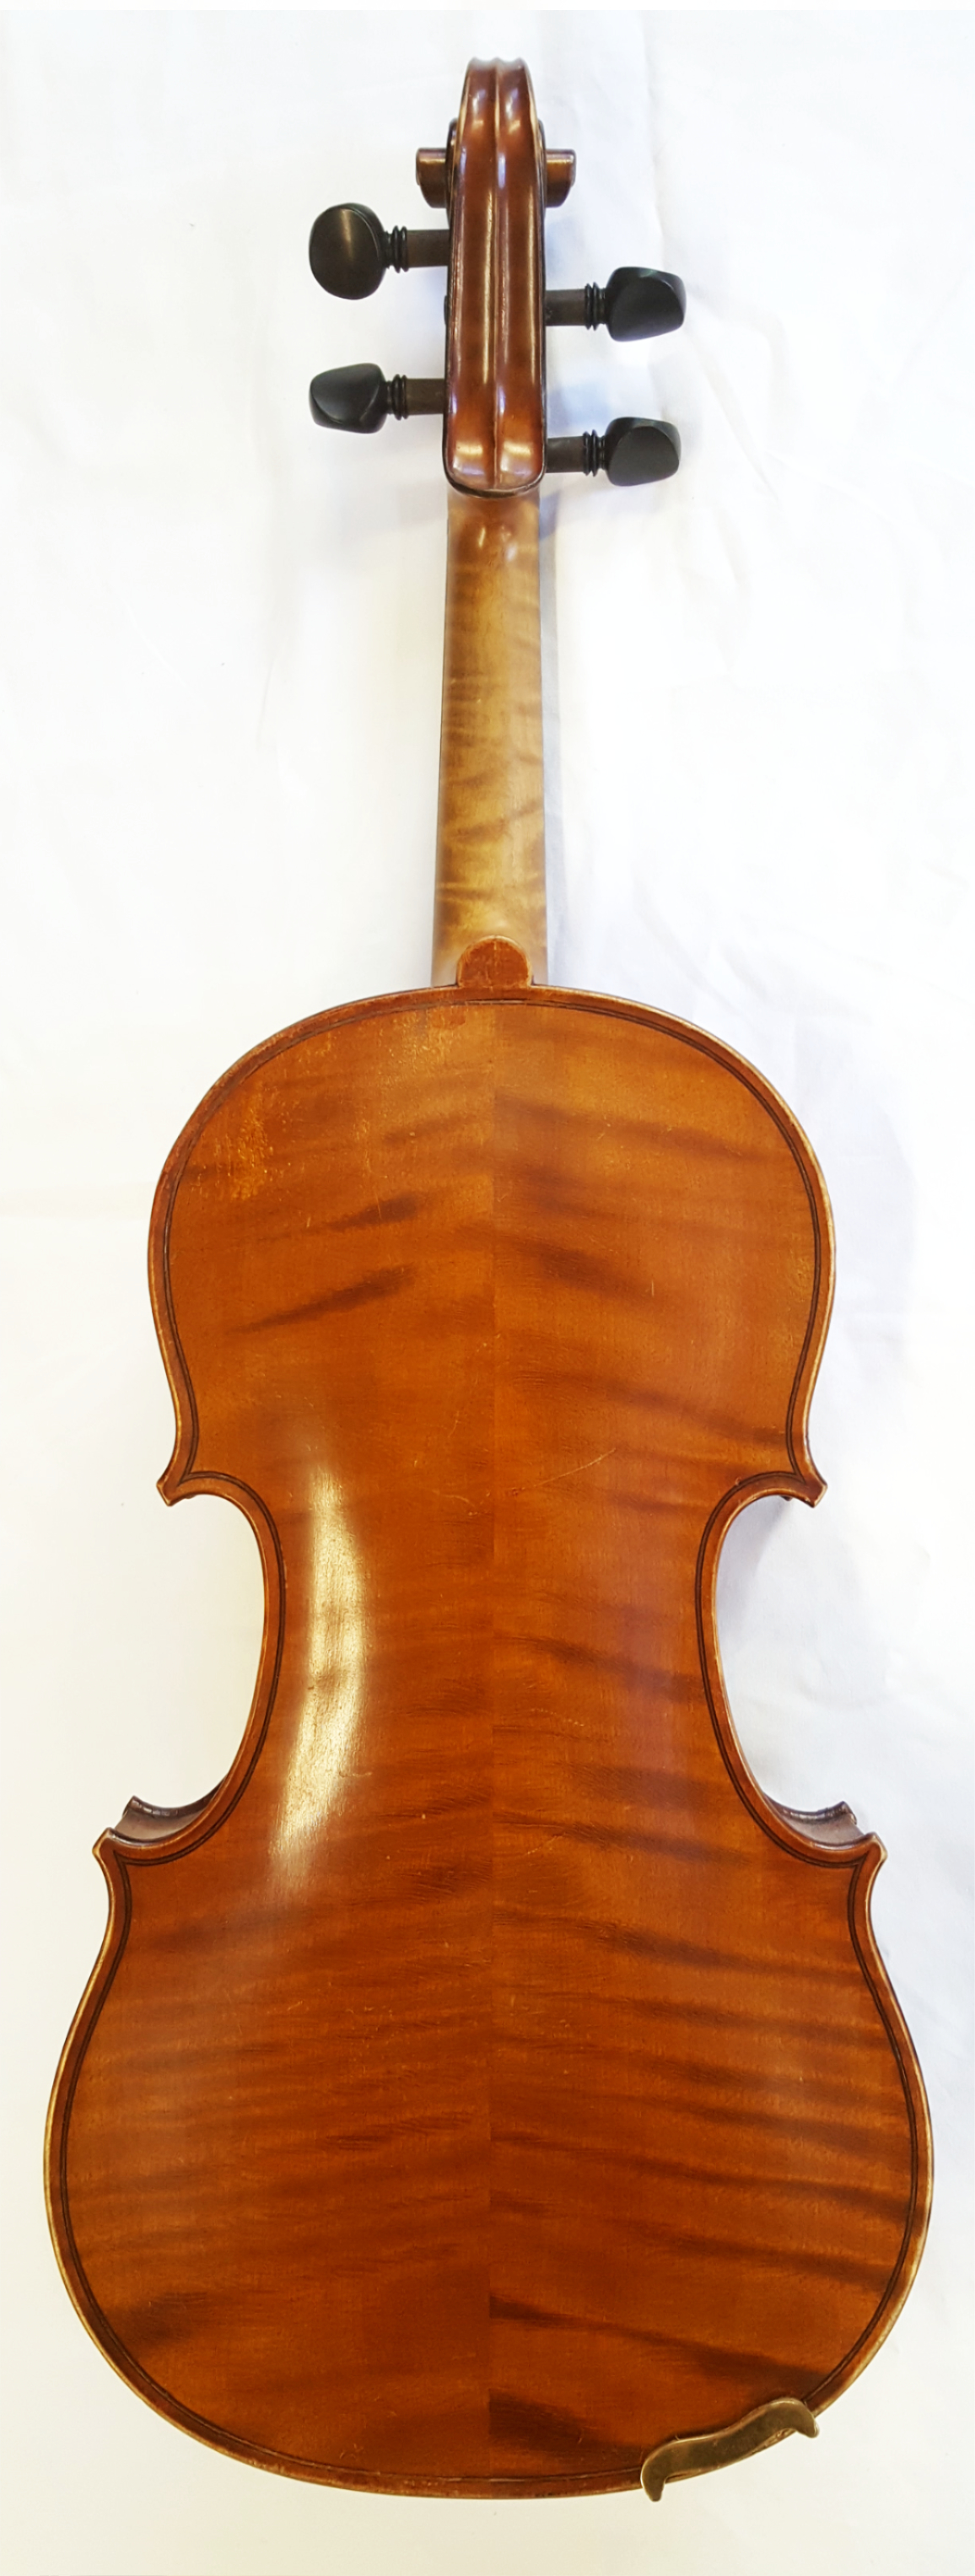 J.B. Collin-Mezin. France 1900 | The String Workshop. N.Z.